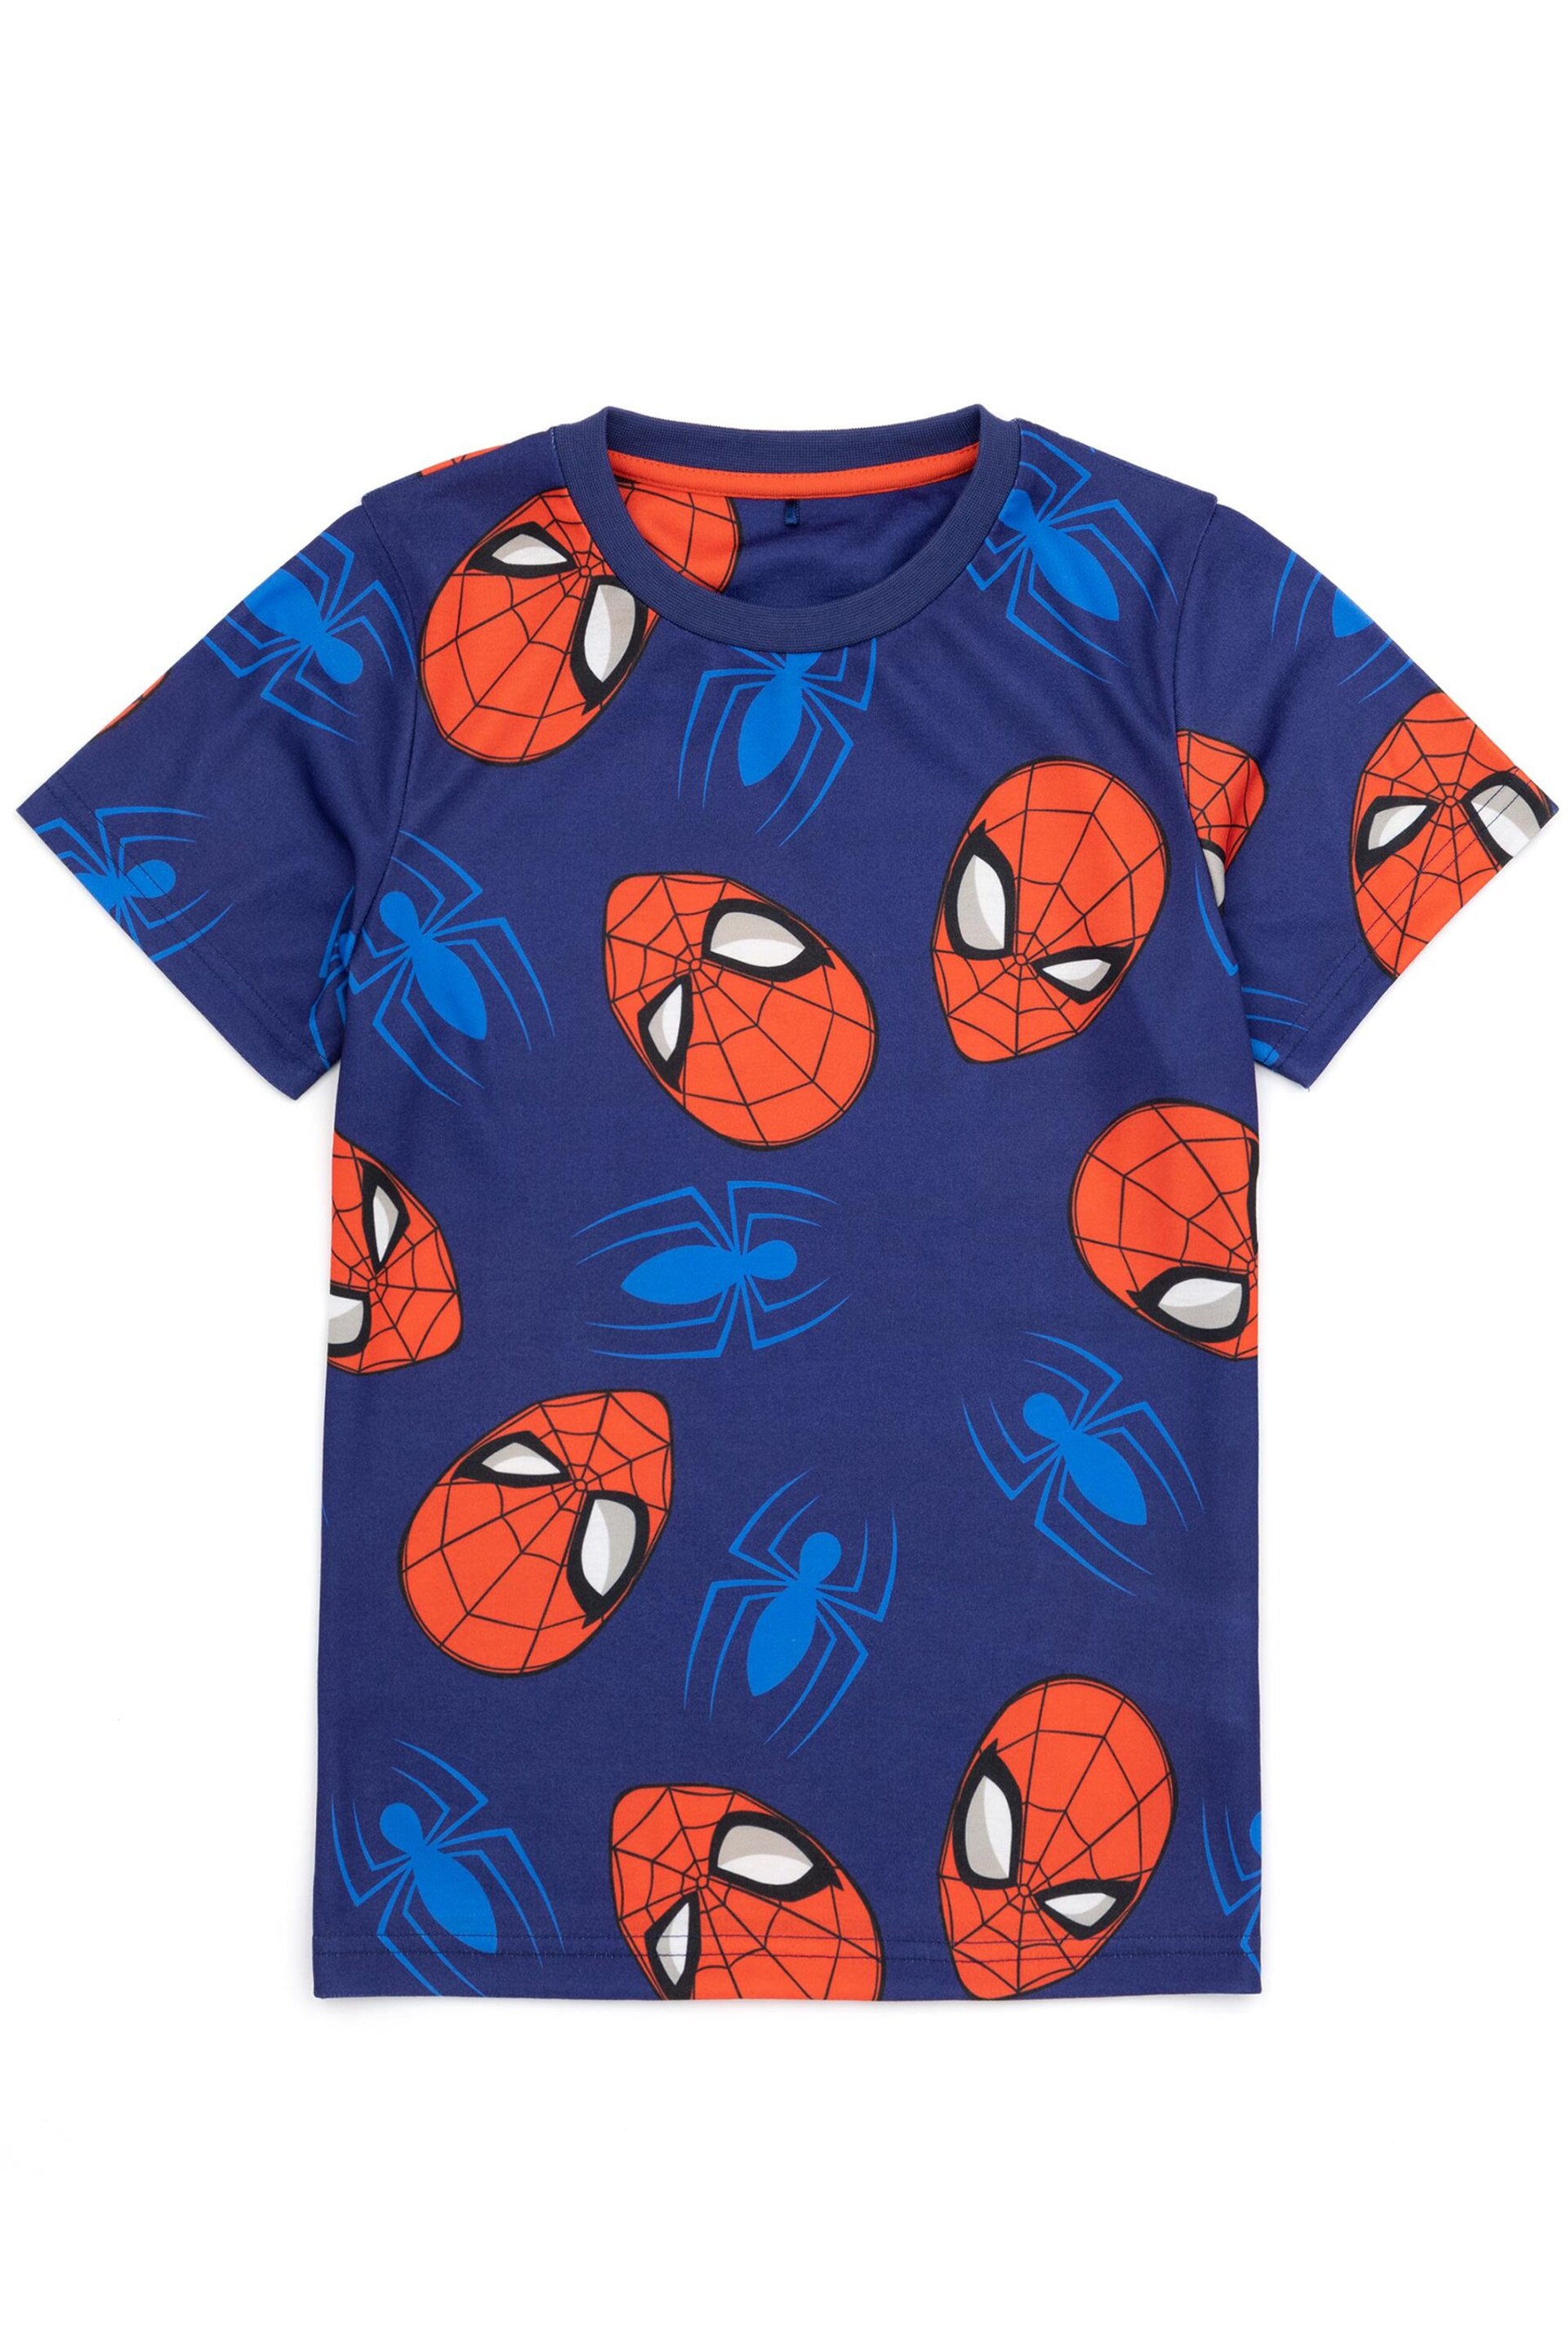 Vanilla Underground Red Boys Spiderman Pyjamas 2 Pack - Image 2 of 5